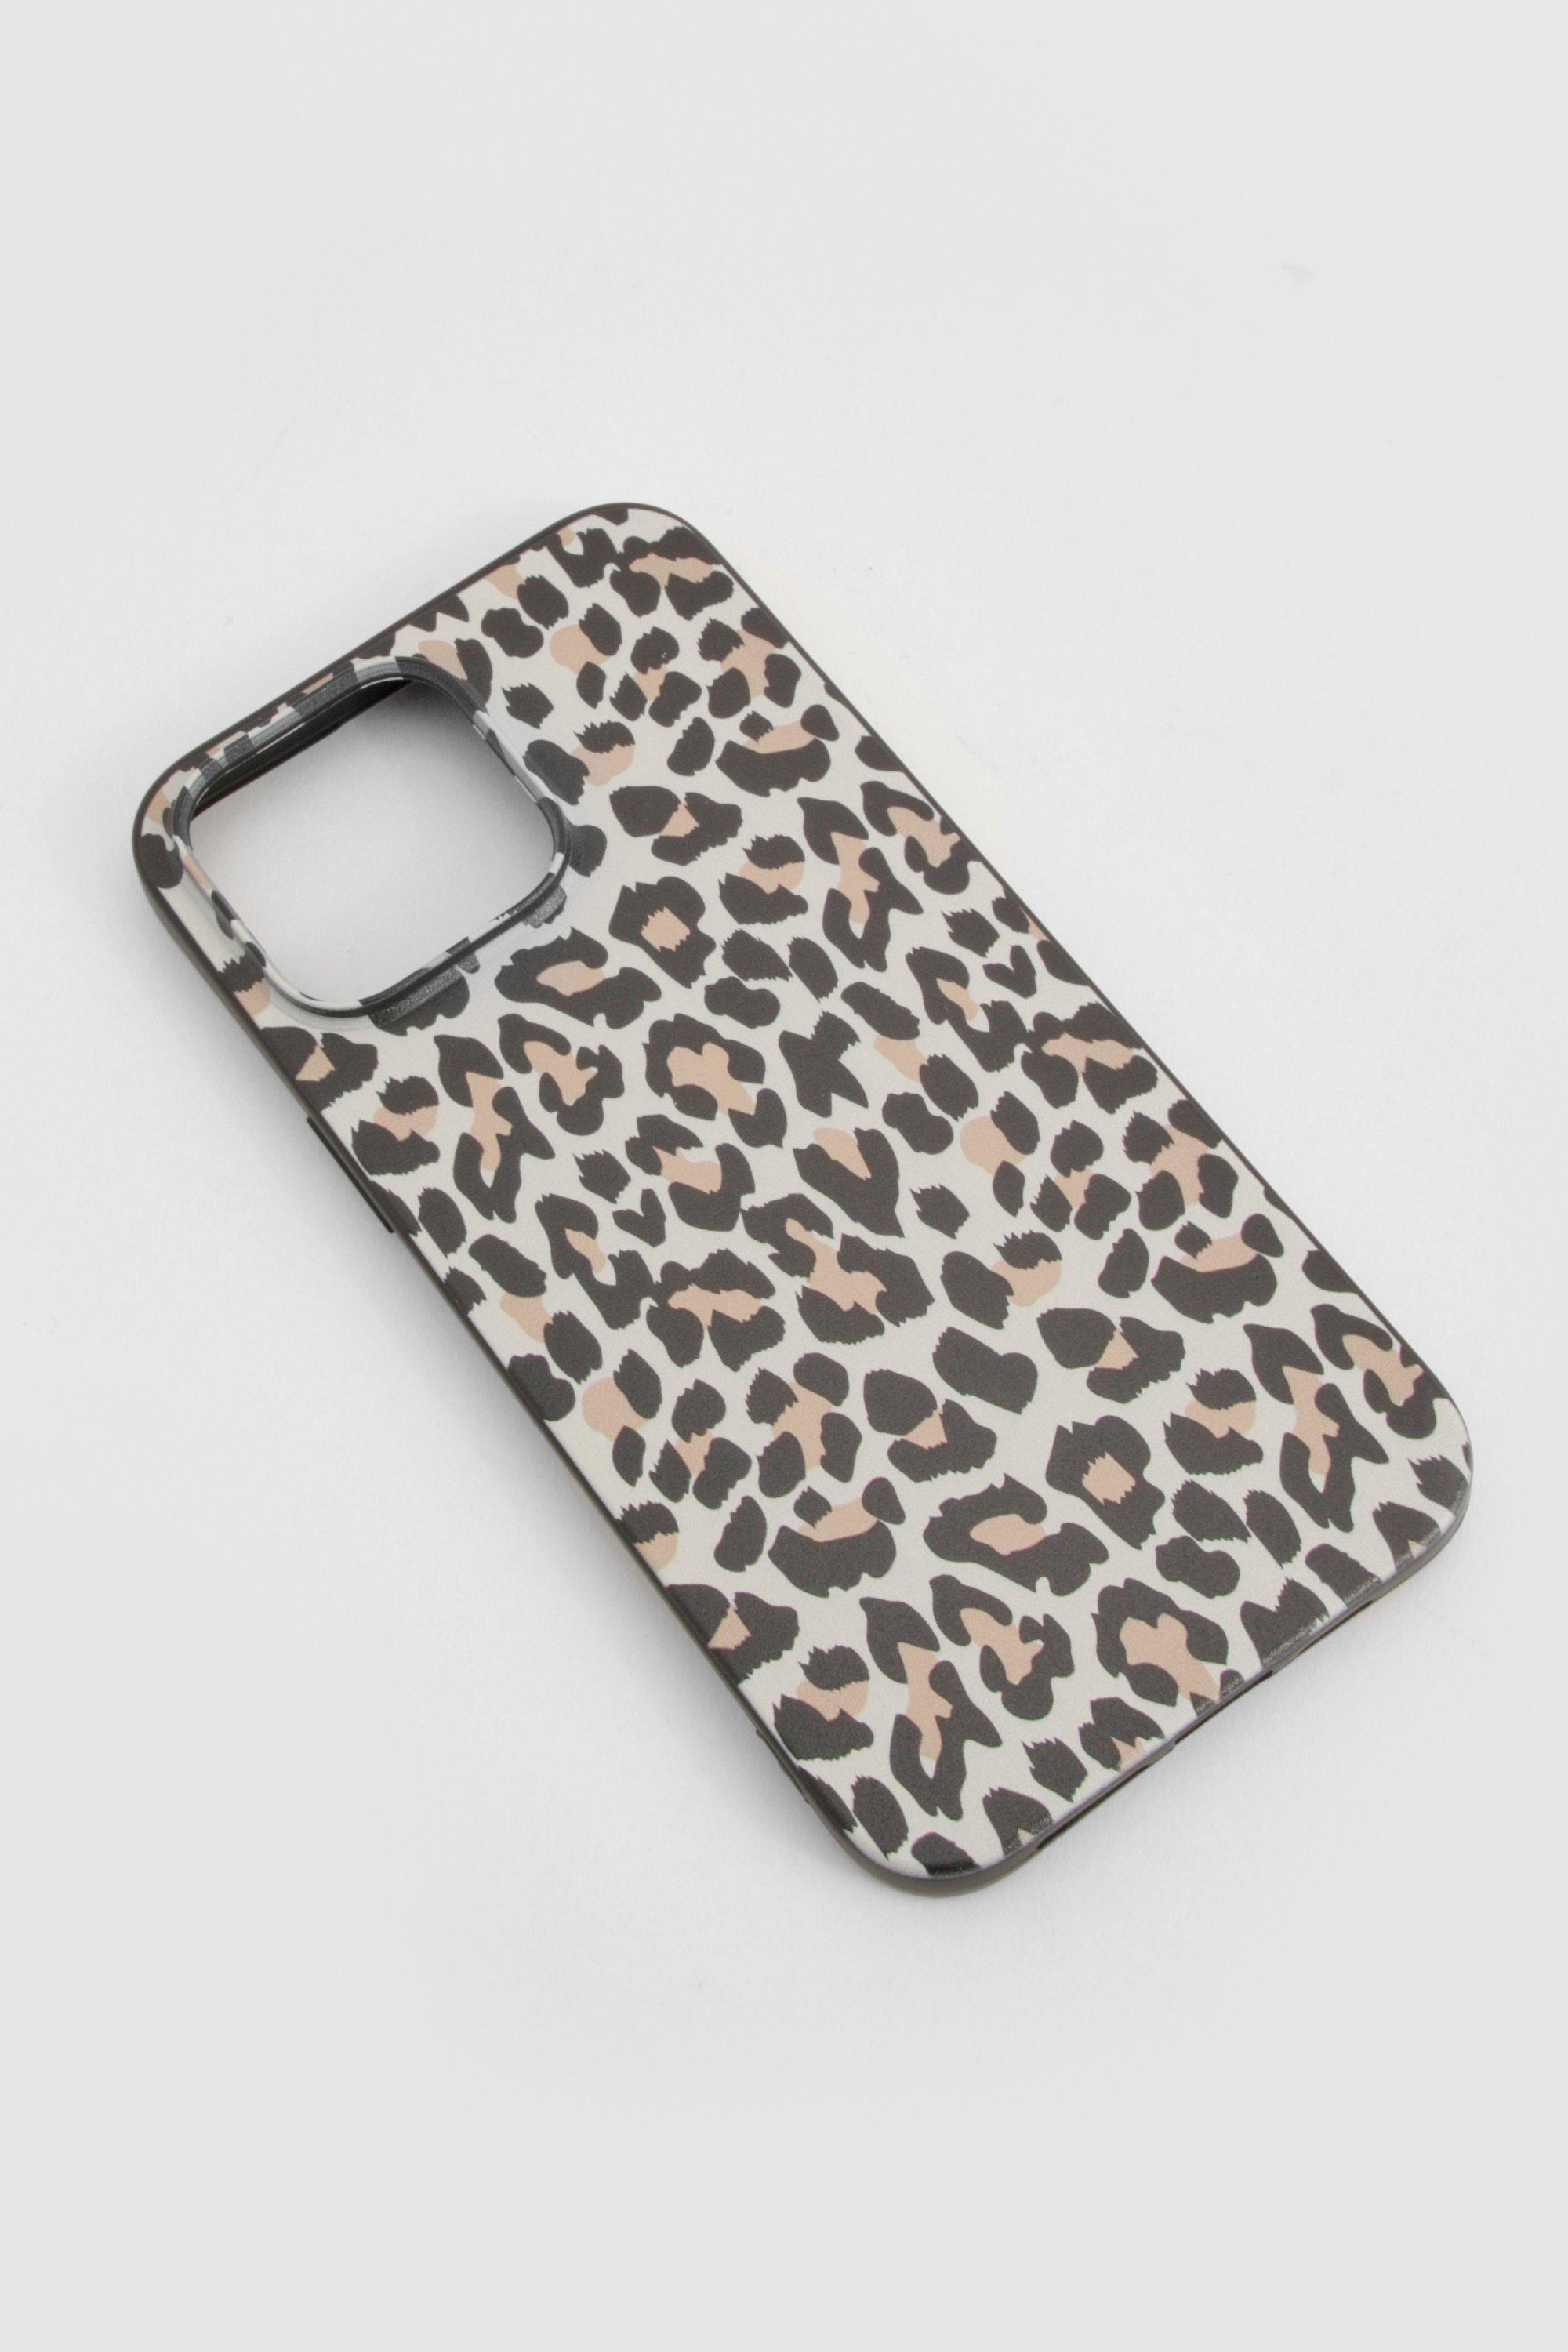 Image of Leopard Print Phone Case, Multi